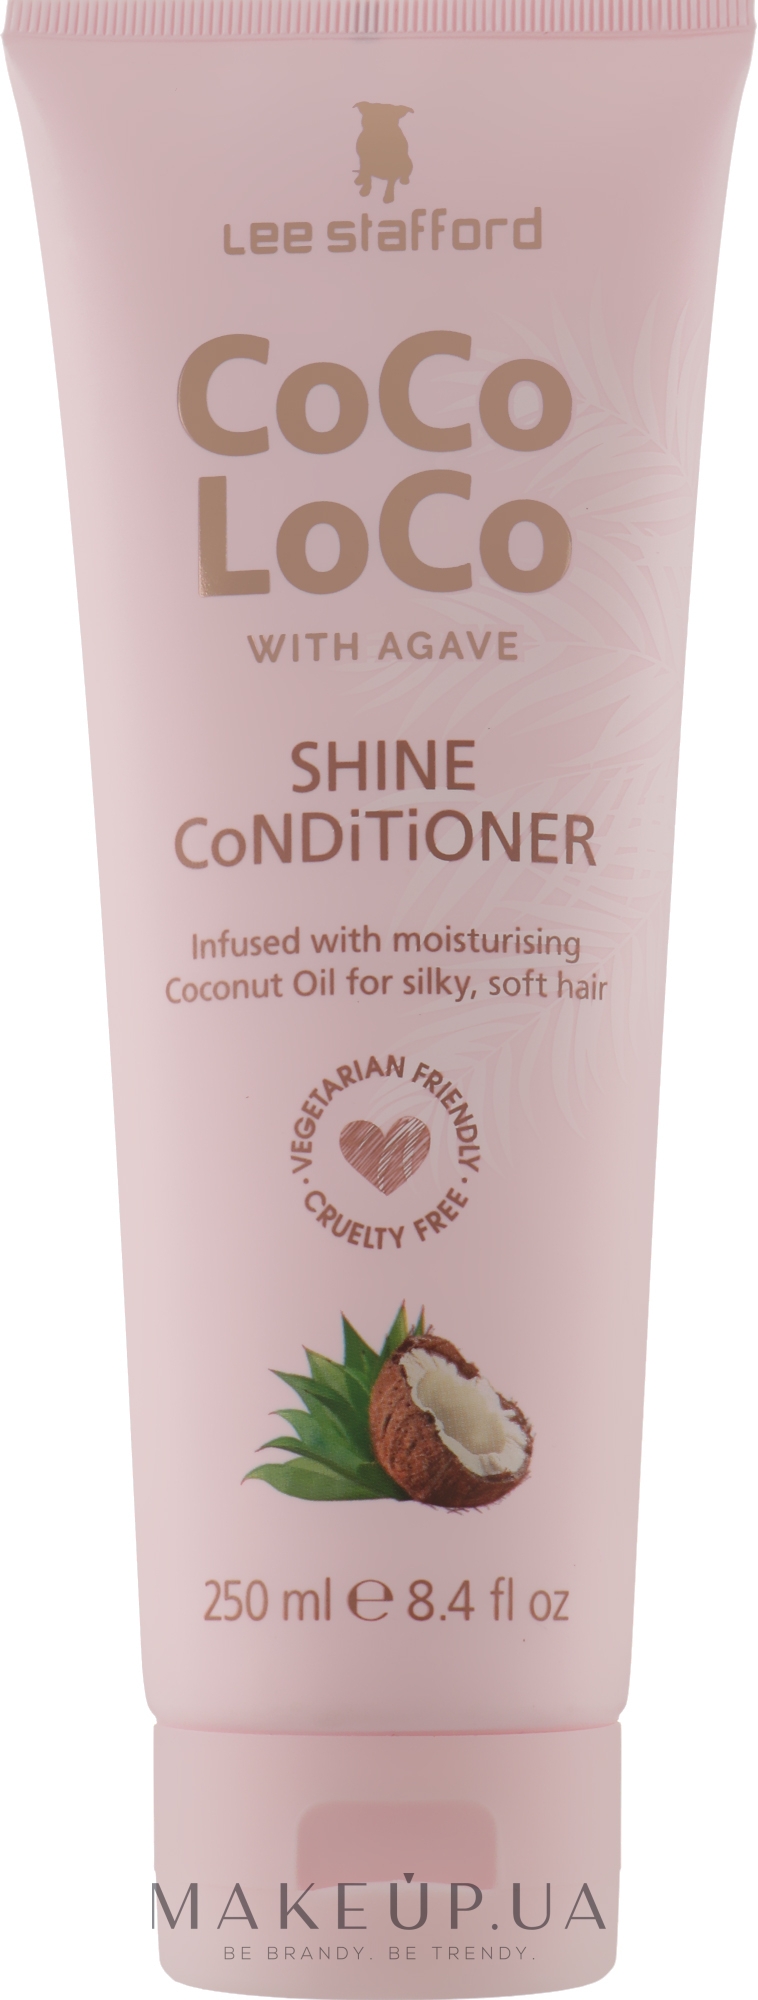 Увлажняющий кондиционер для волос - Lee Stafford Сосо Loco Shine Conditioner with Coconut Oil — фото 250ml